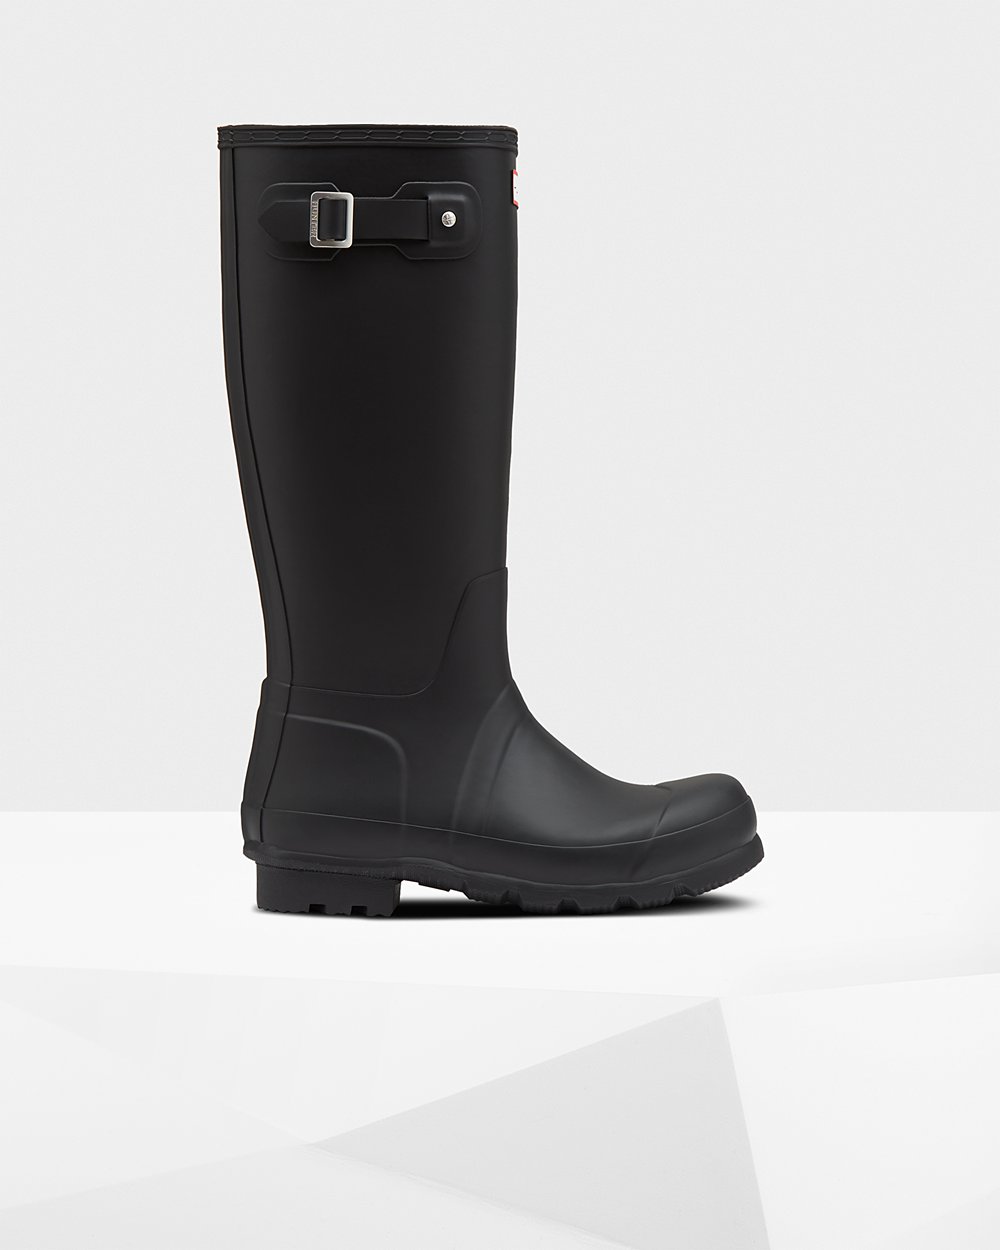 Mens Tall Rain Boots - Hunter Original Insulated (25YABLNJD) - Black